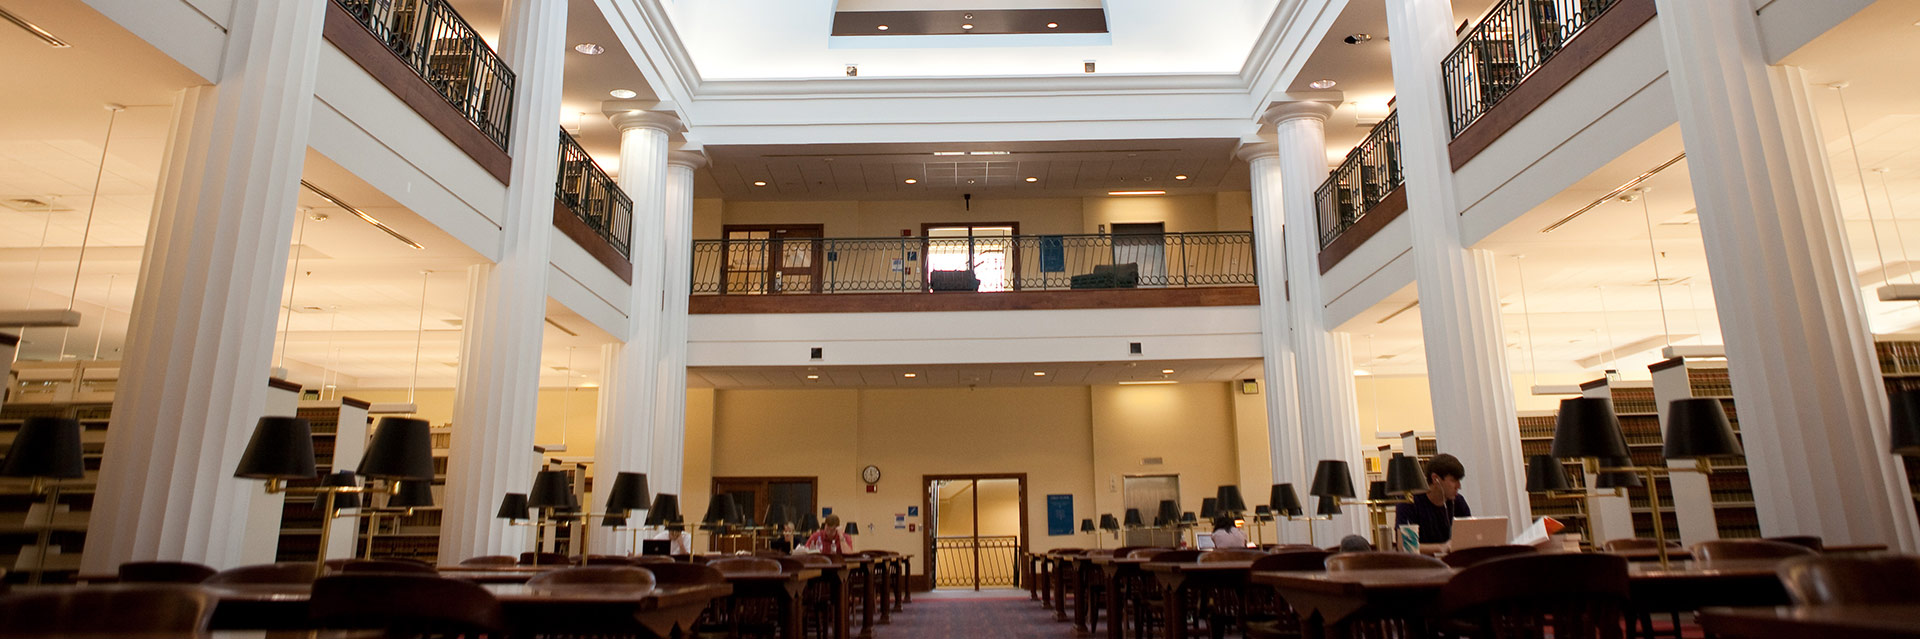 law library interior Header